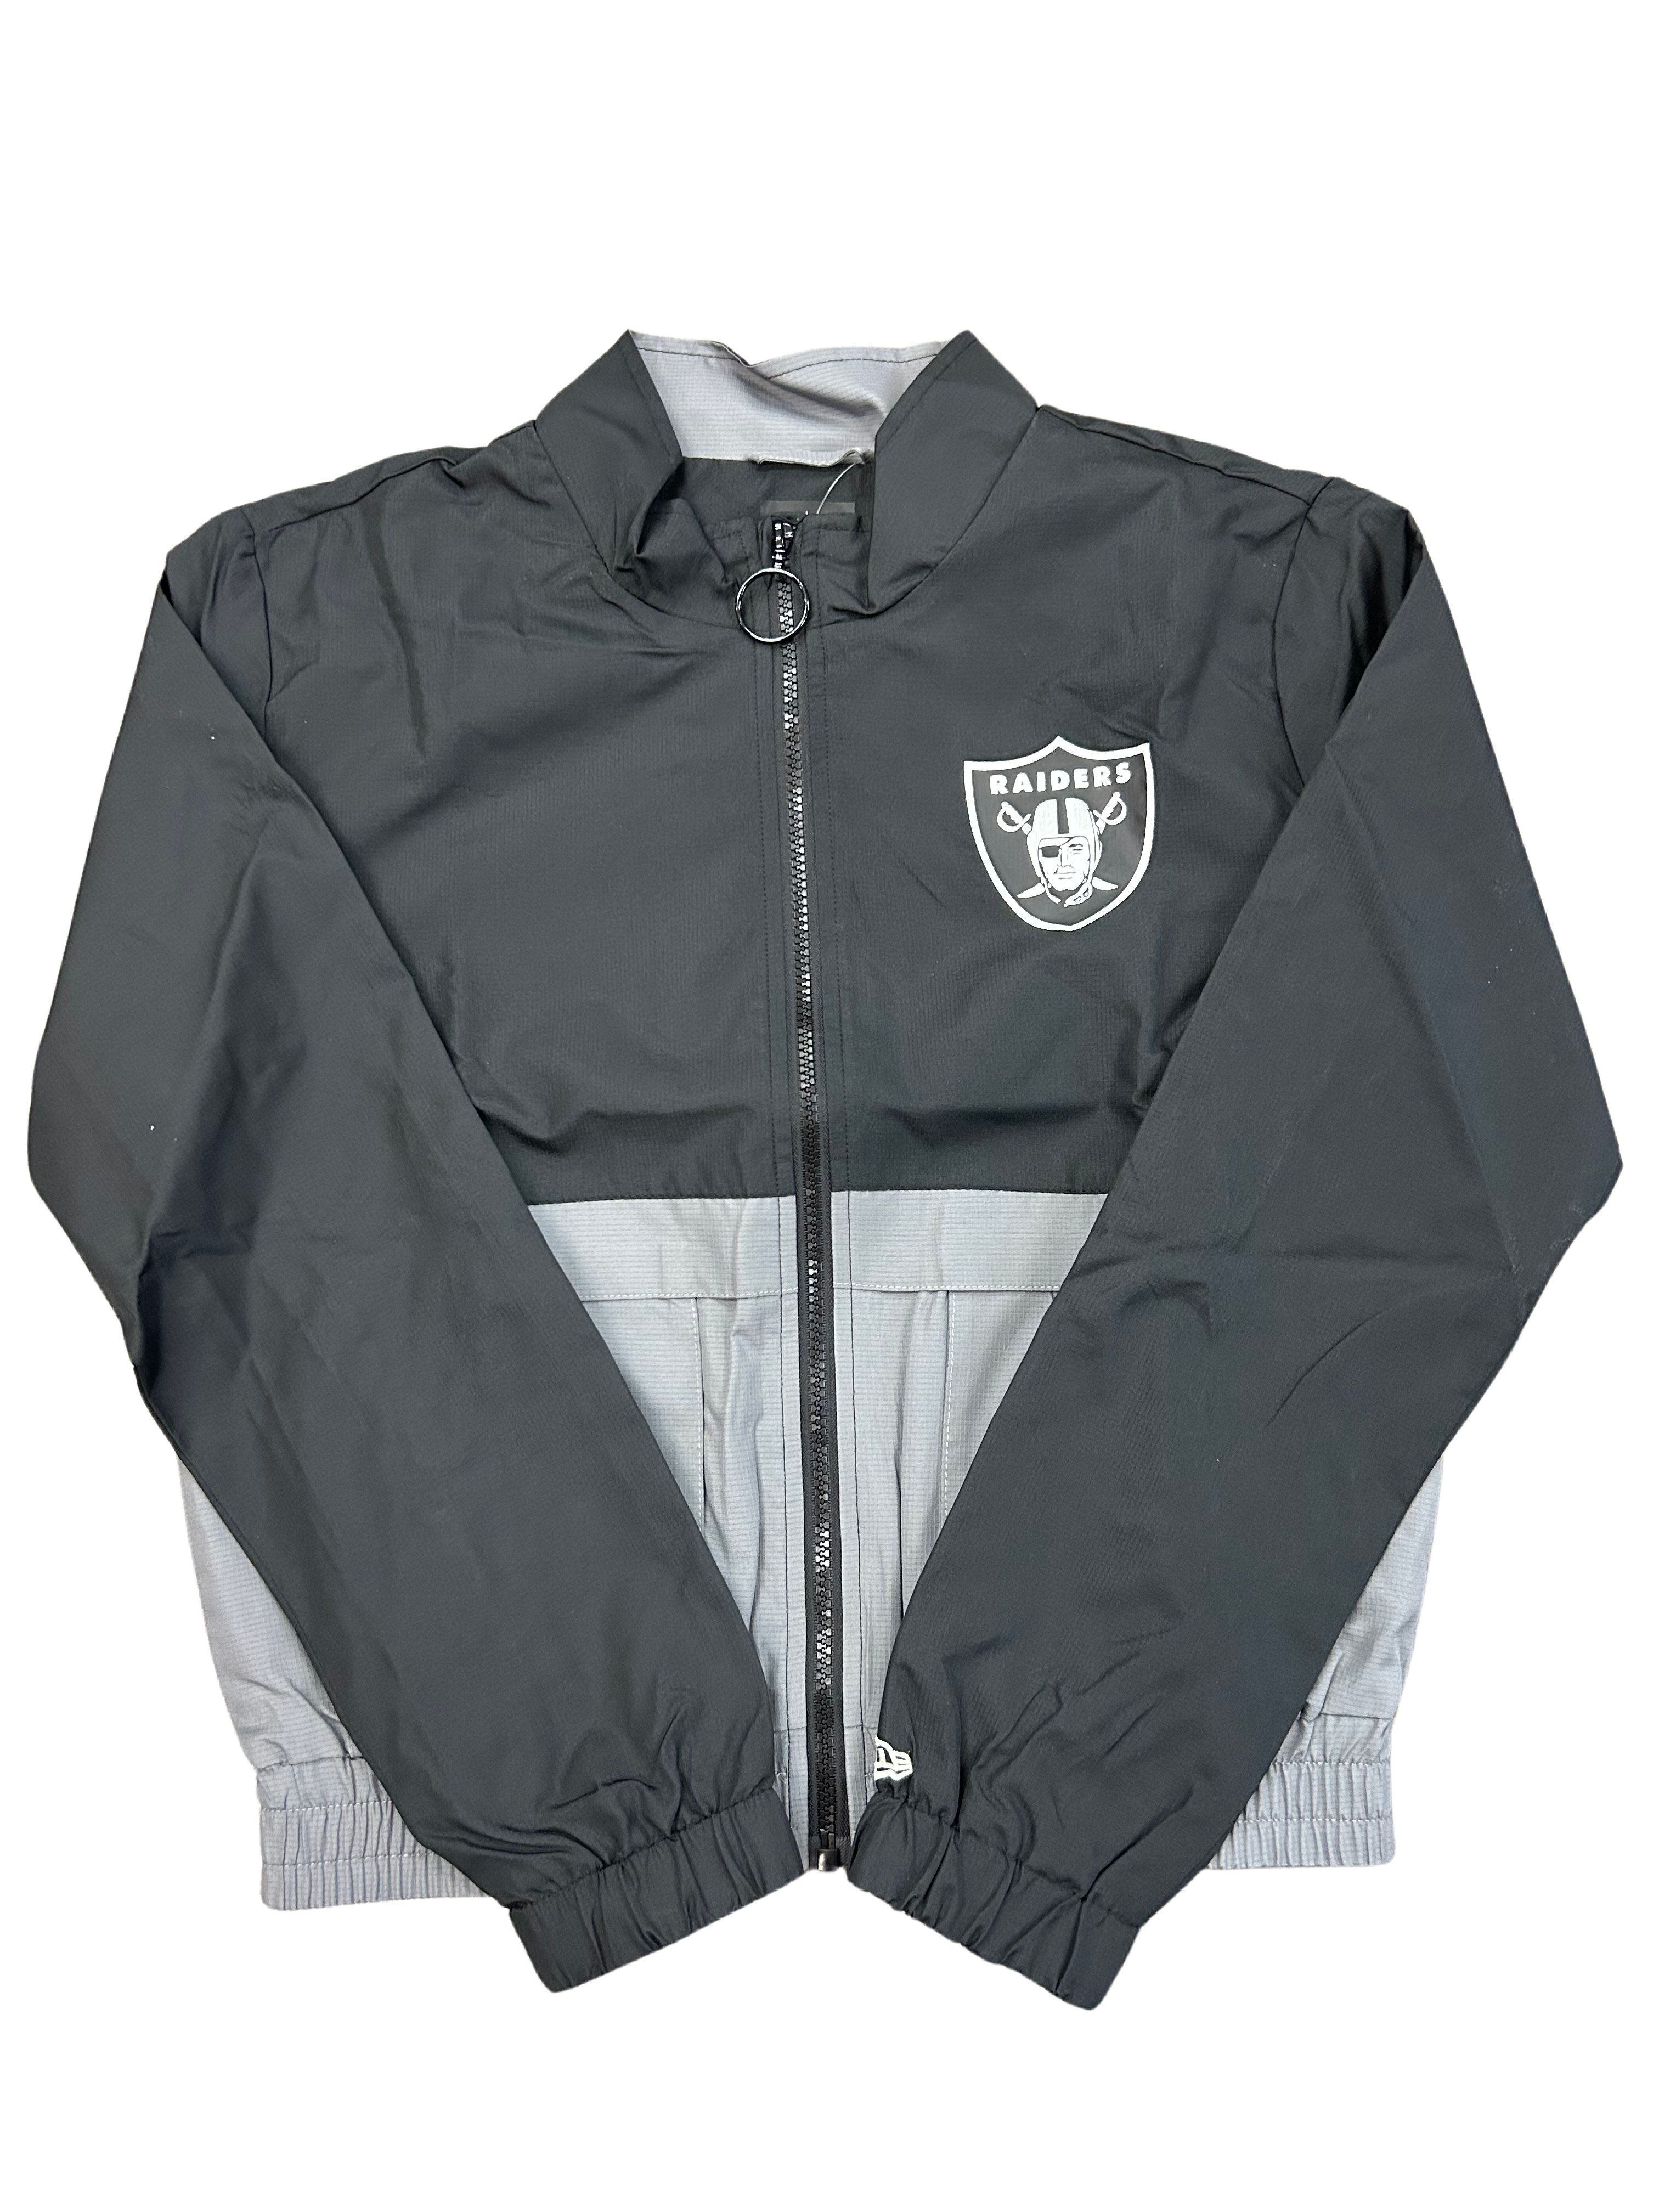 New Era Women's Las Vegas Raiders Cropped Jacket-Black/Gray